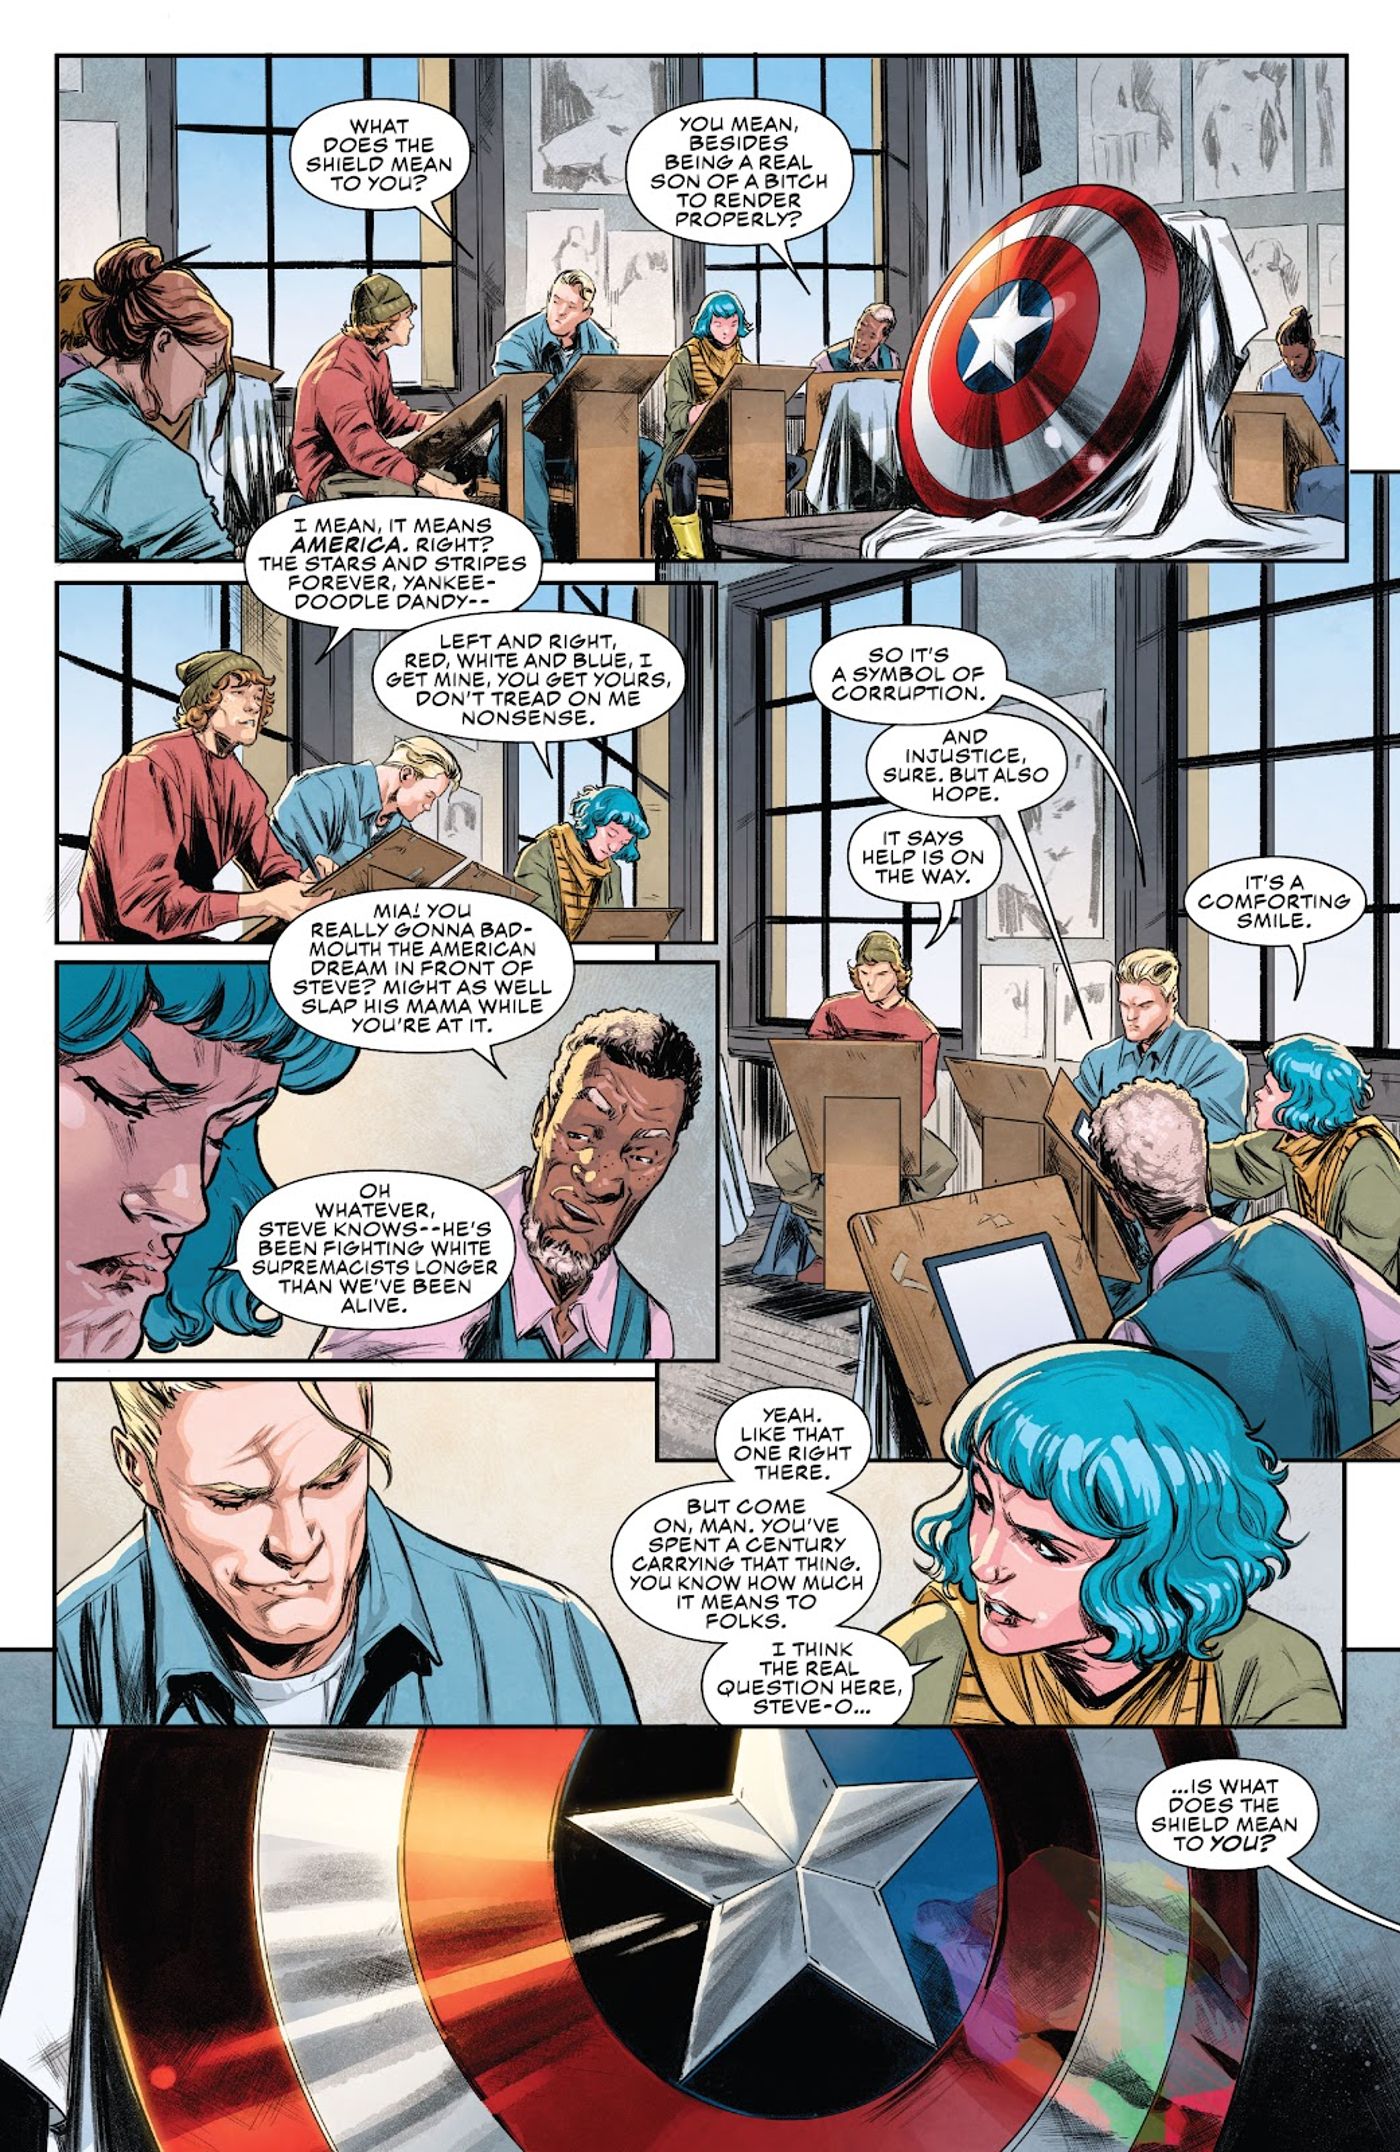 Captain-America-asks-friends-what-does-shield-means-symbol